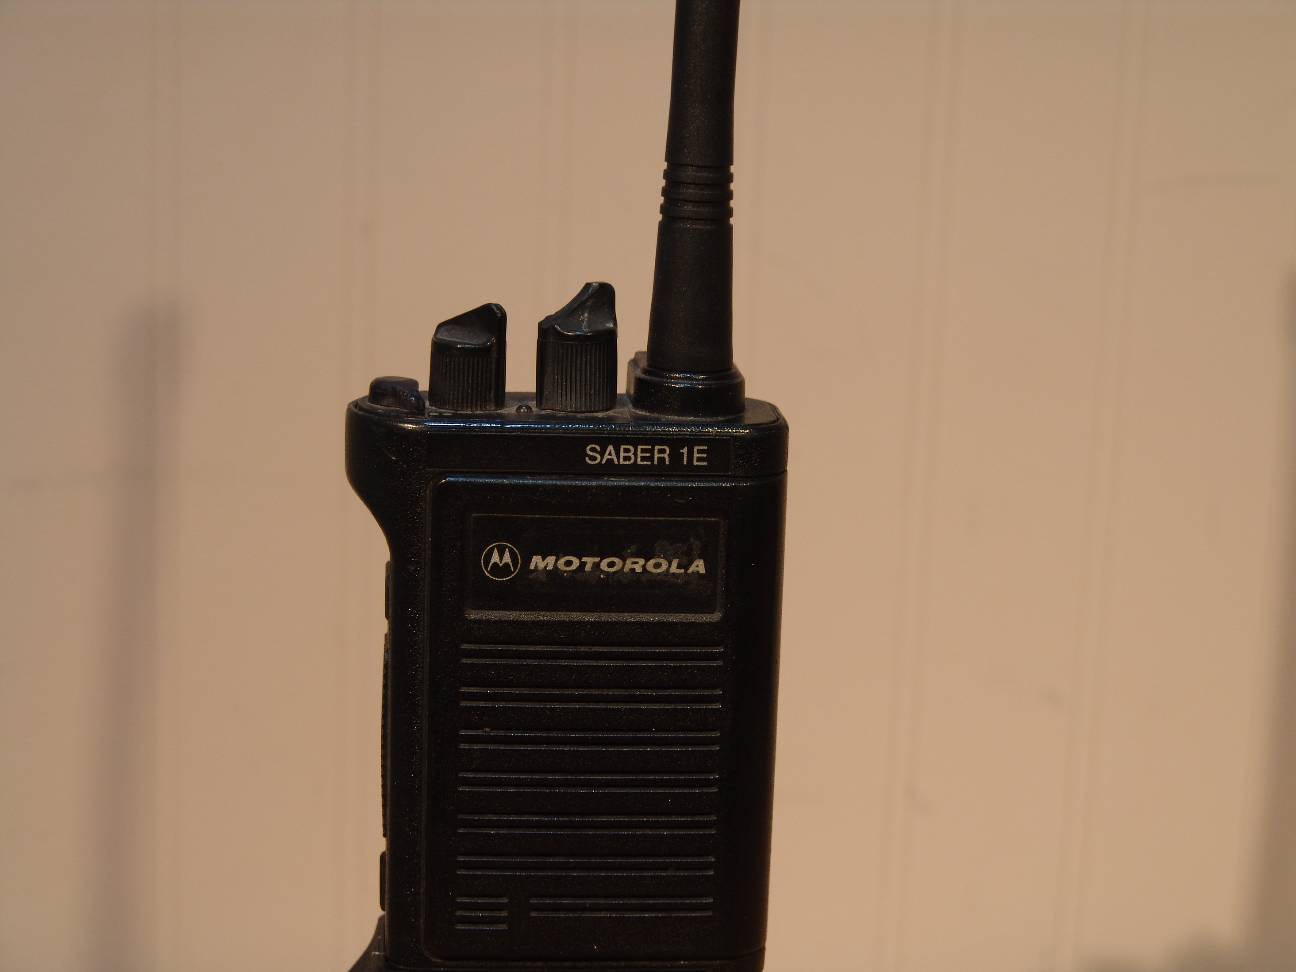 Motorola saber 1E two way uhf portable hand held radio